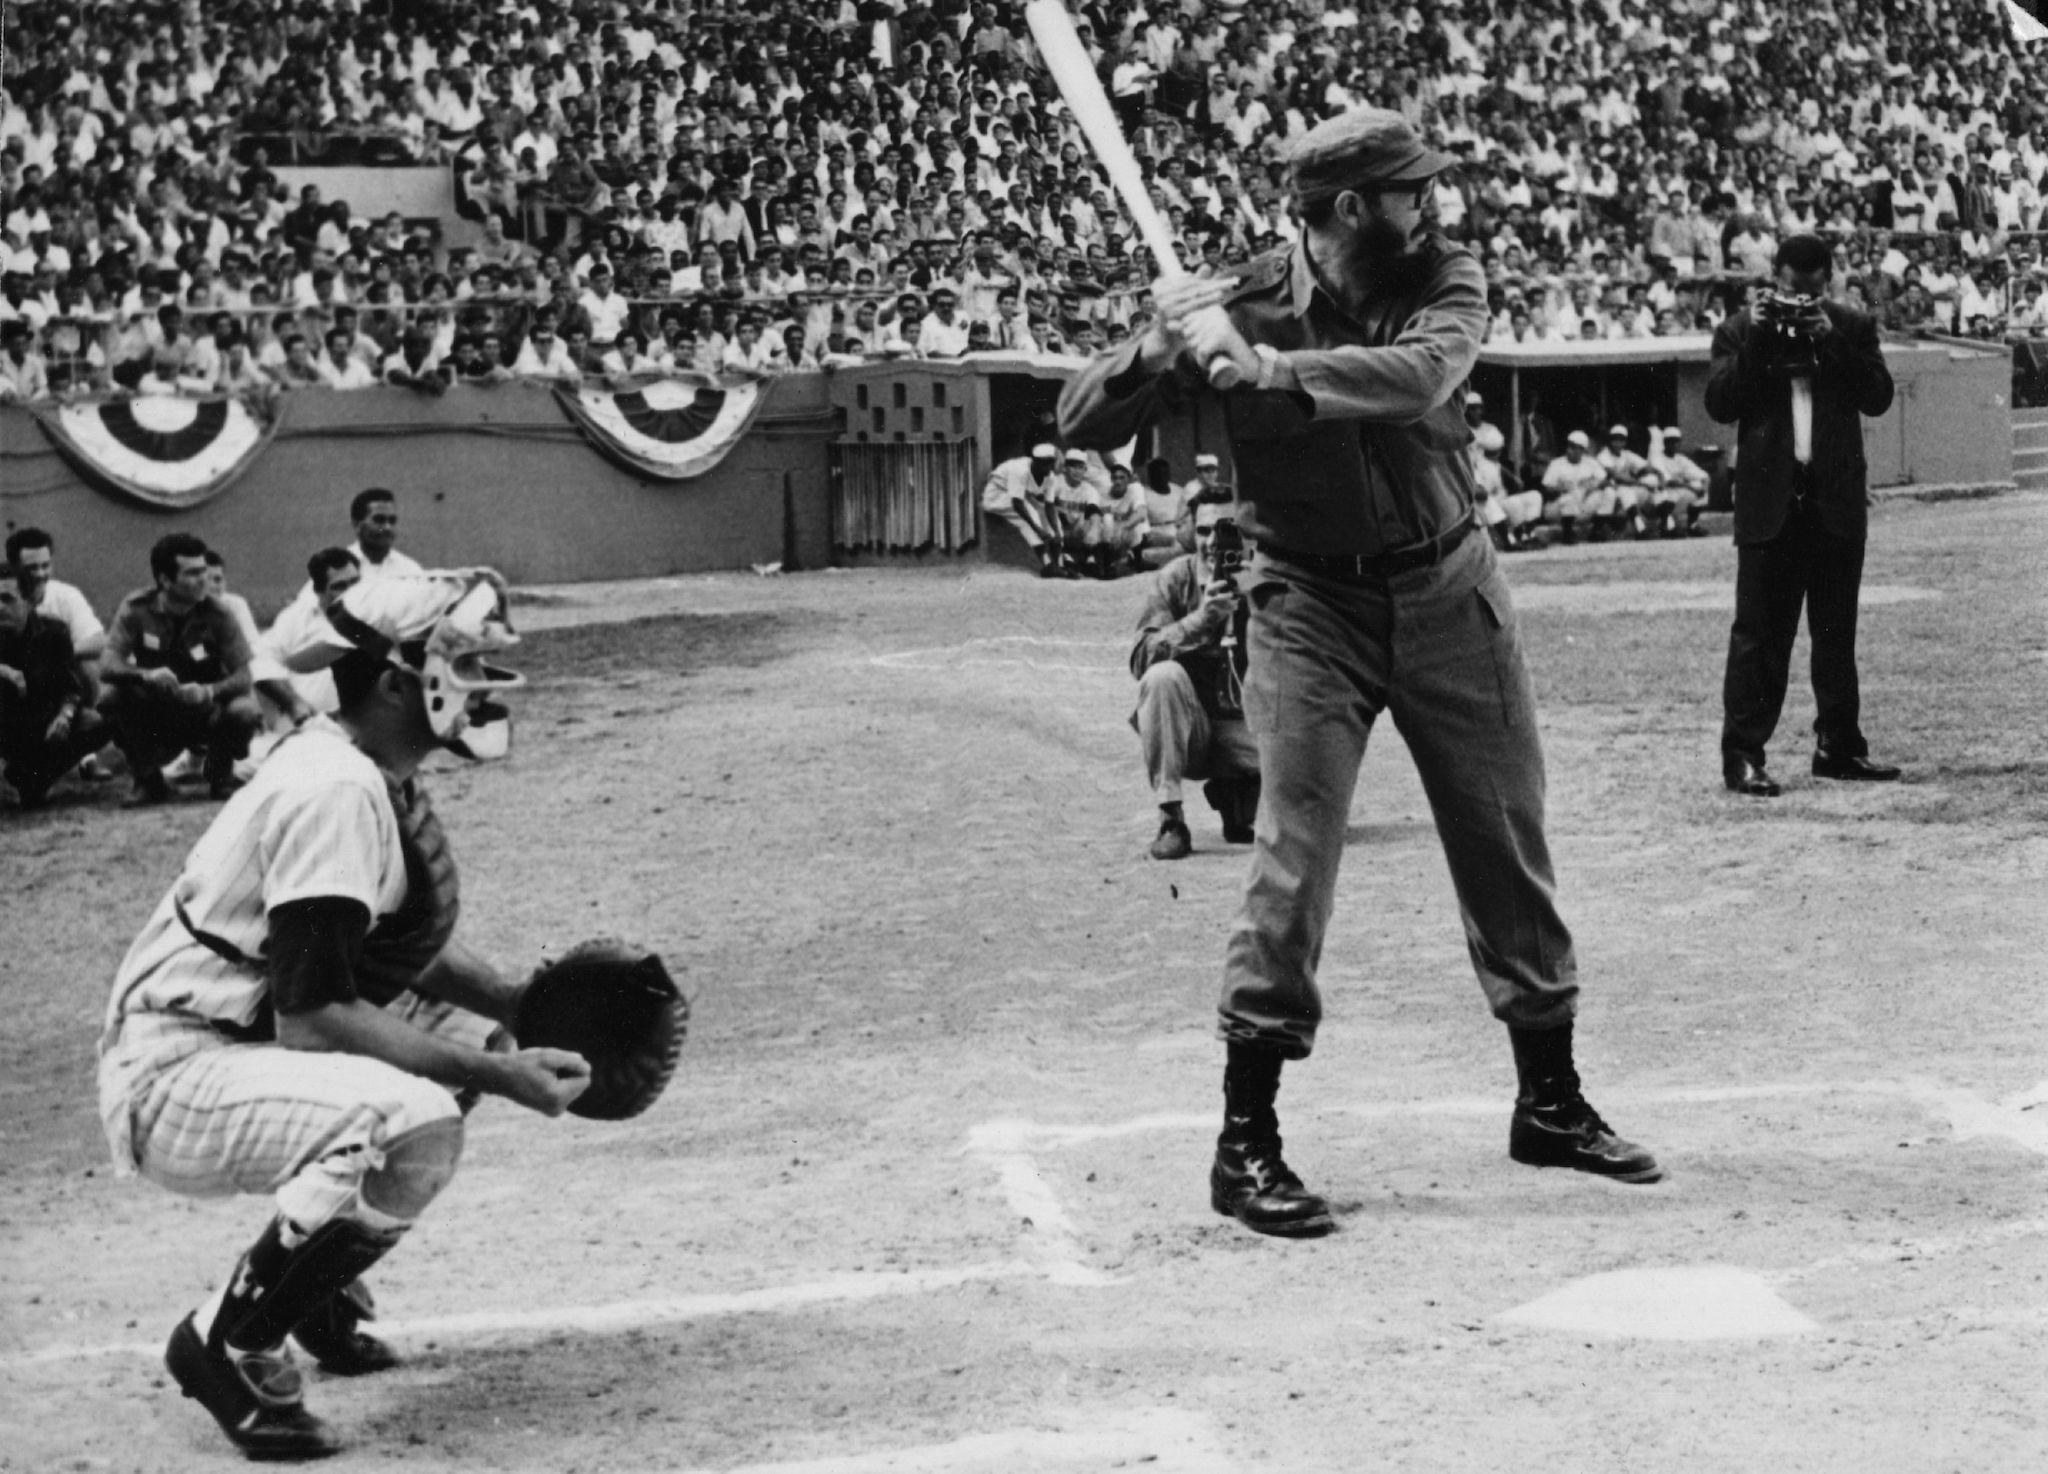 Cuban revolutionary leader Fidel Castro playing baseball